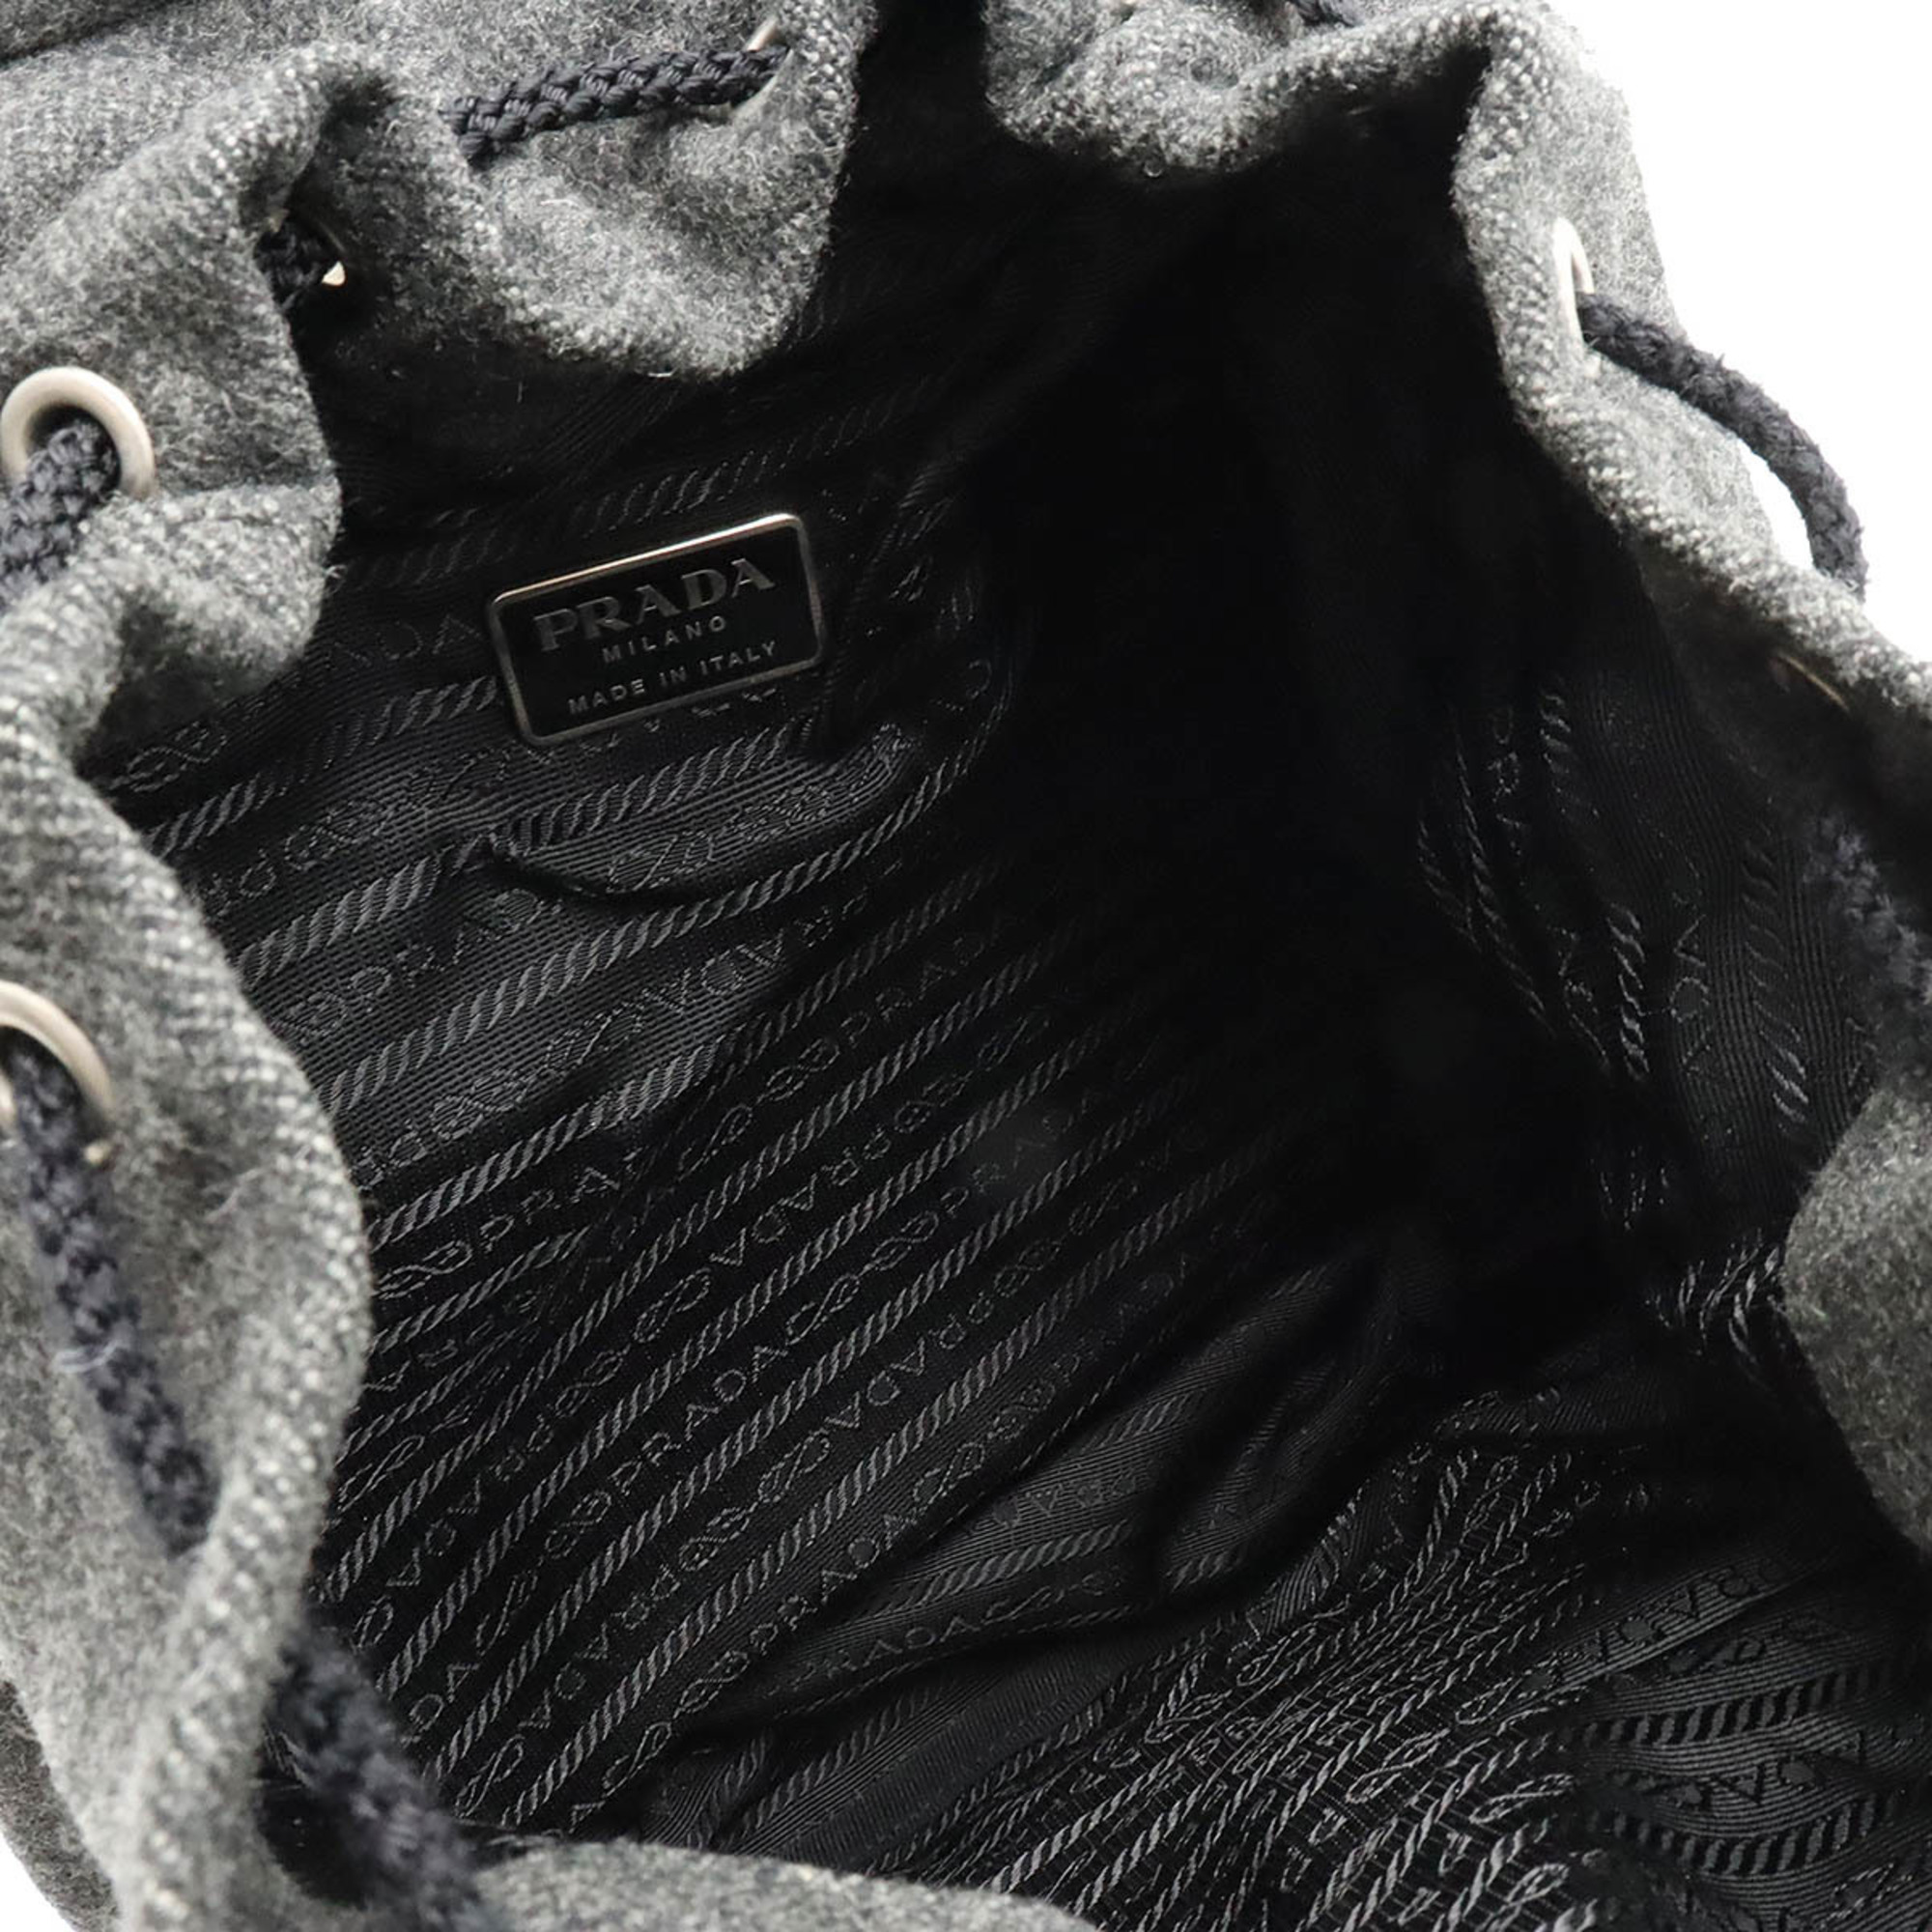 PRADA Prada Backpack Rucksack Wool Canvas Gray Black V203